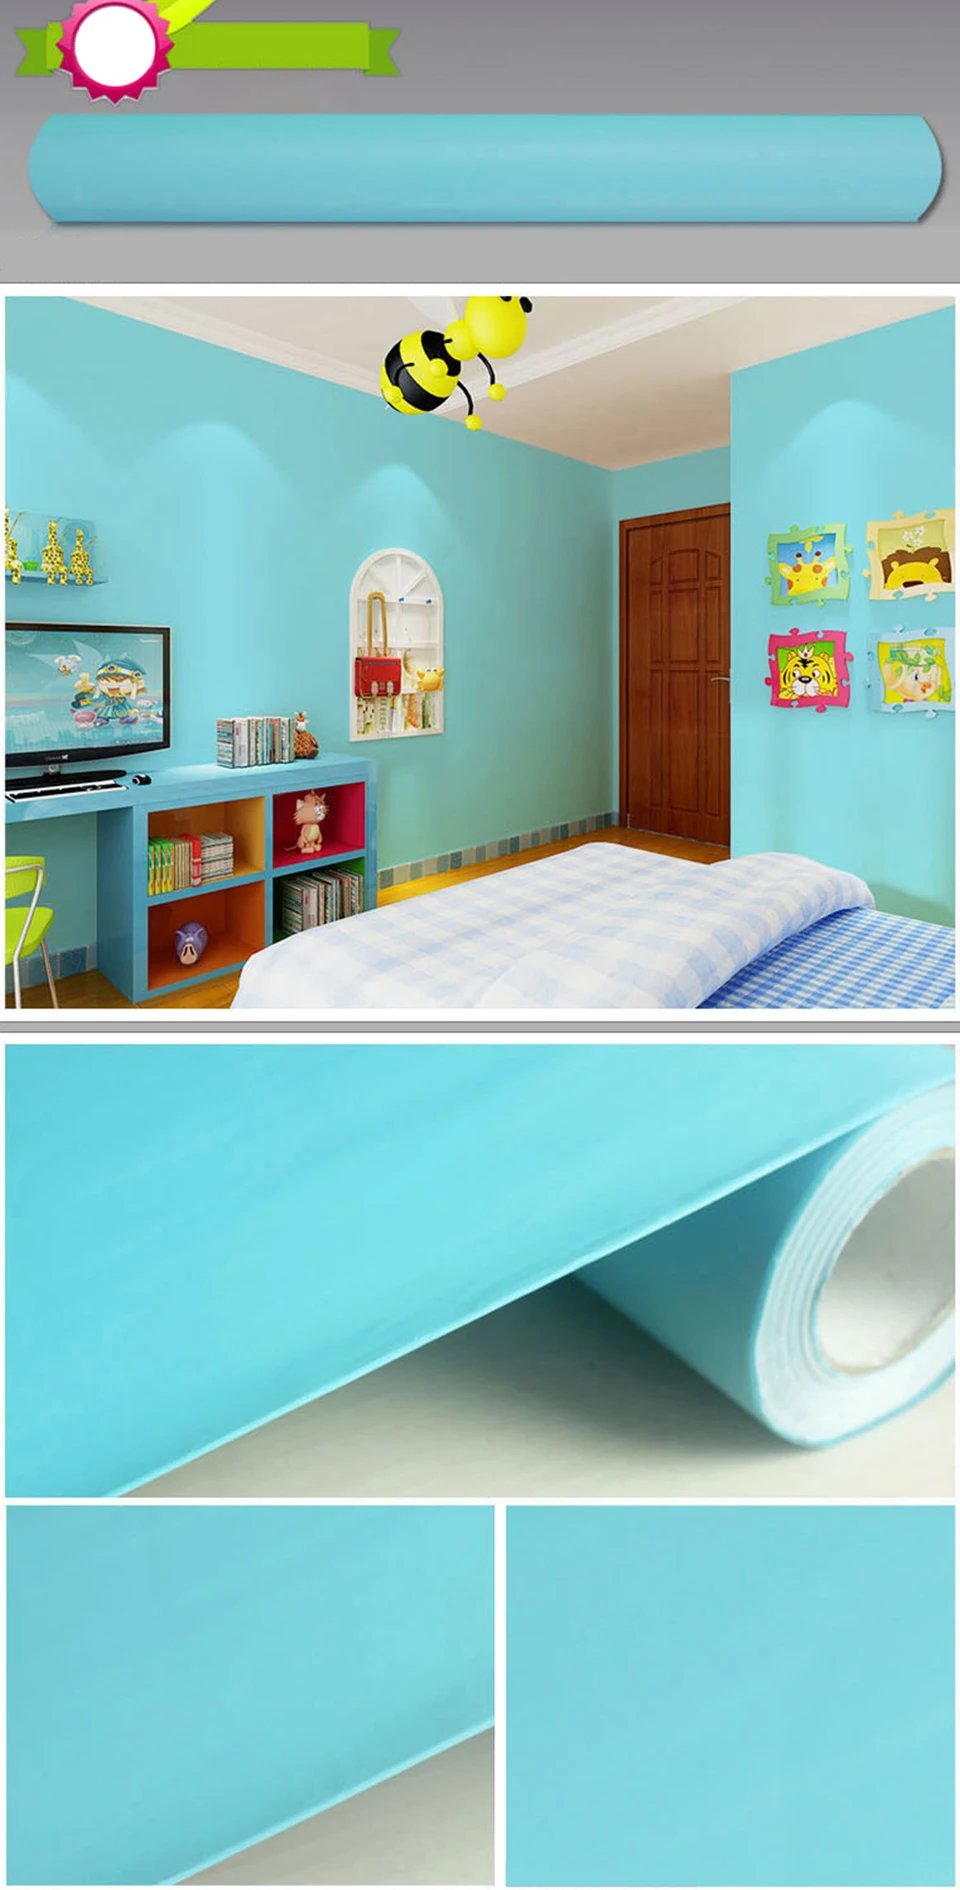 Vinyl PVC Self Adhesive Wallpaper Waterproof Furniture Renovation Cabinet Contact Paper Living Room DIY Wall Stickers Home Decor